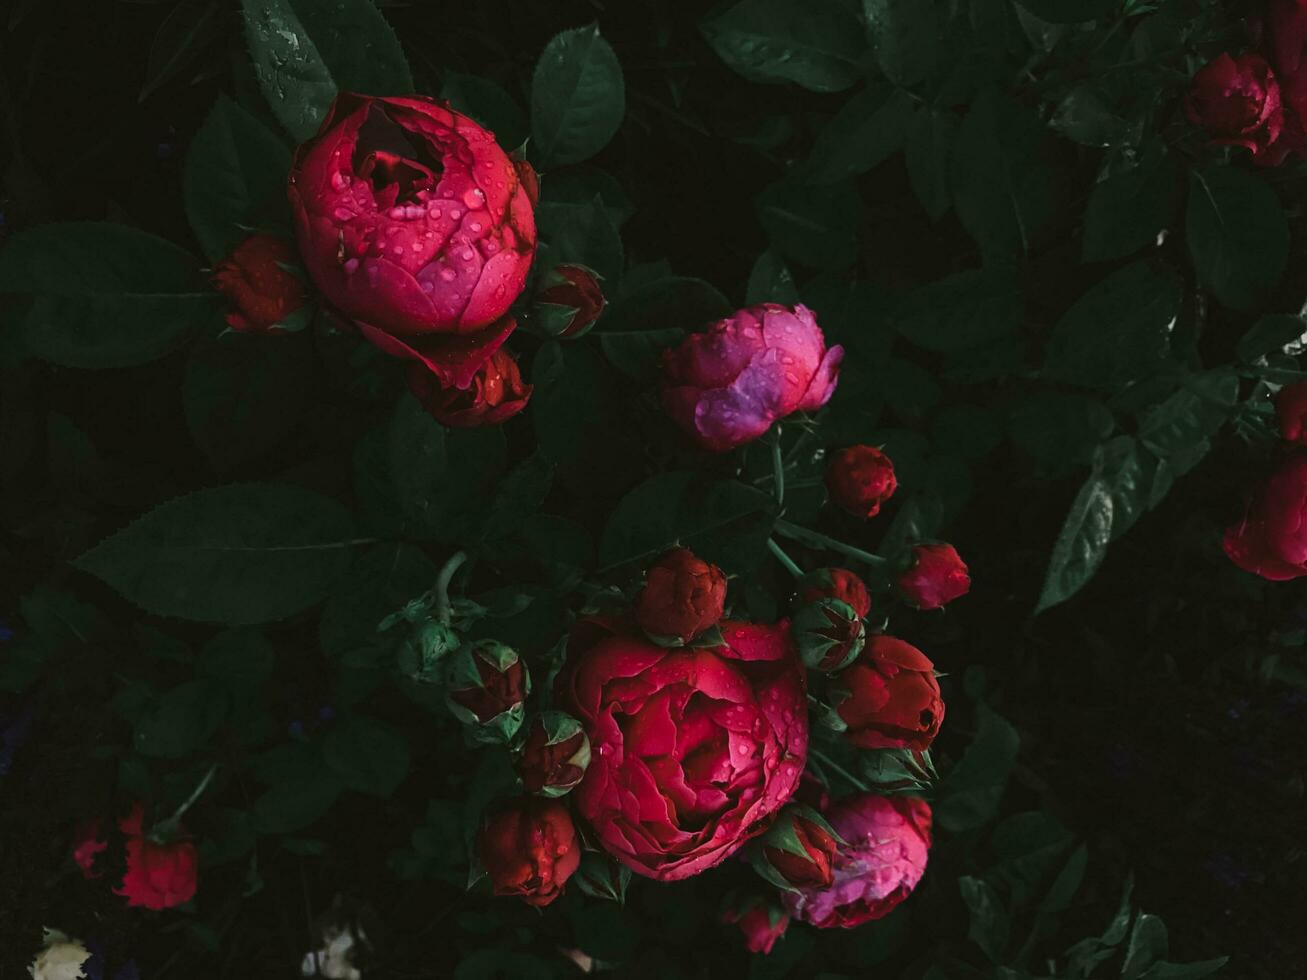 Pink roses on dark background. Aesthetic Garden floral wallpaper photo